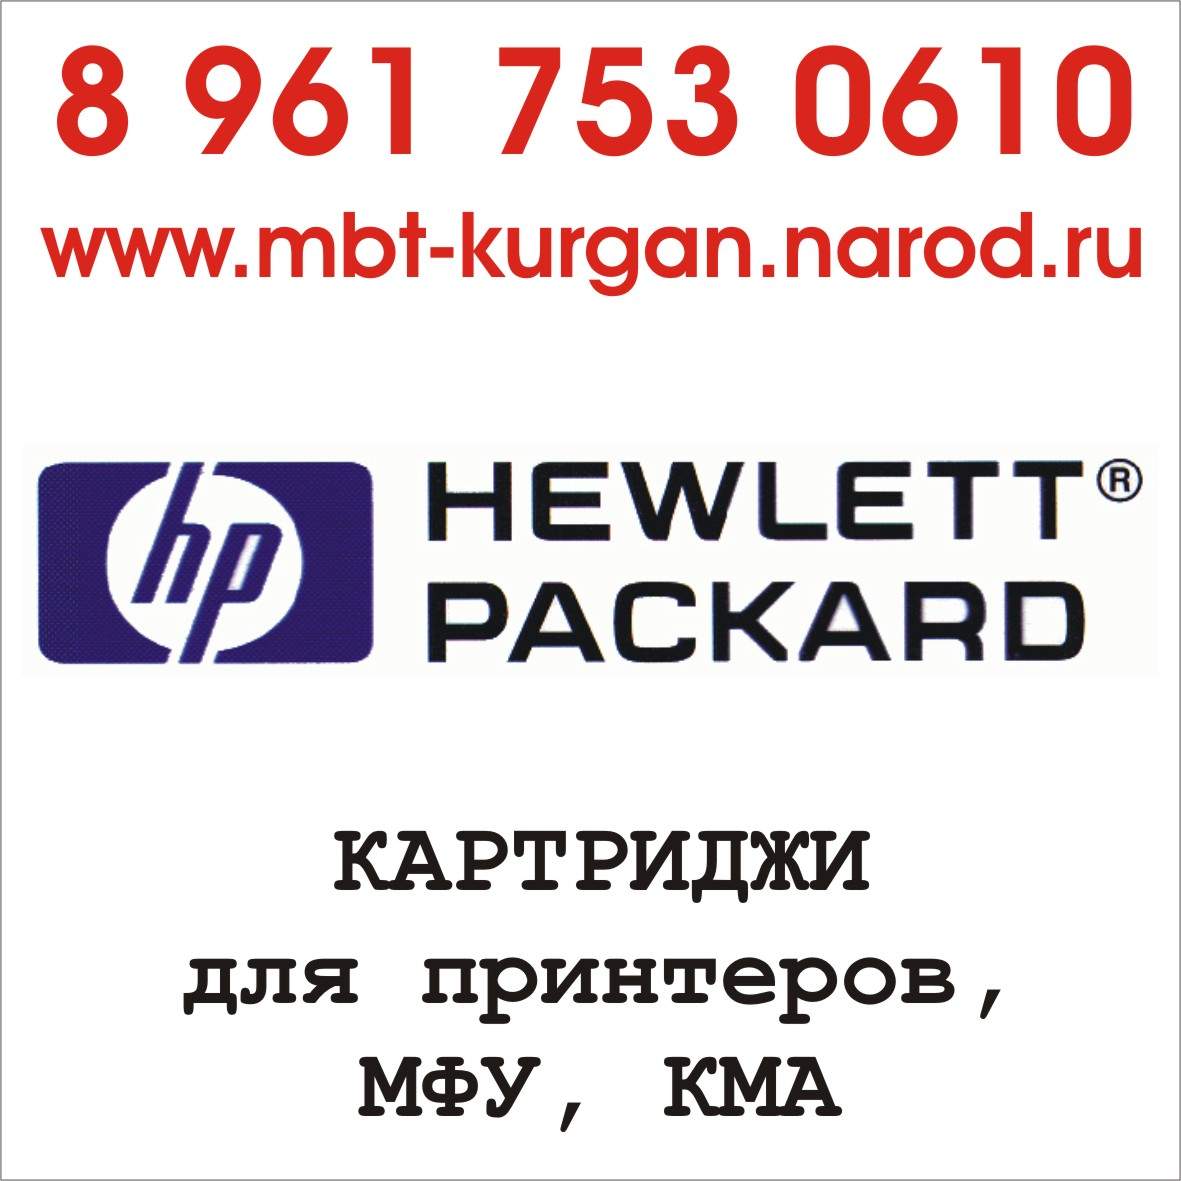 Картриджи для принтеров, МФУ, КМА HP Hewlett Packard